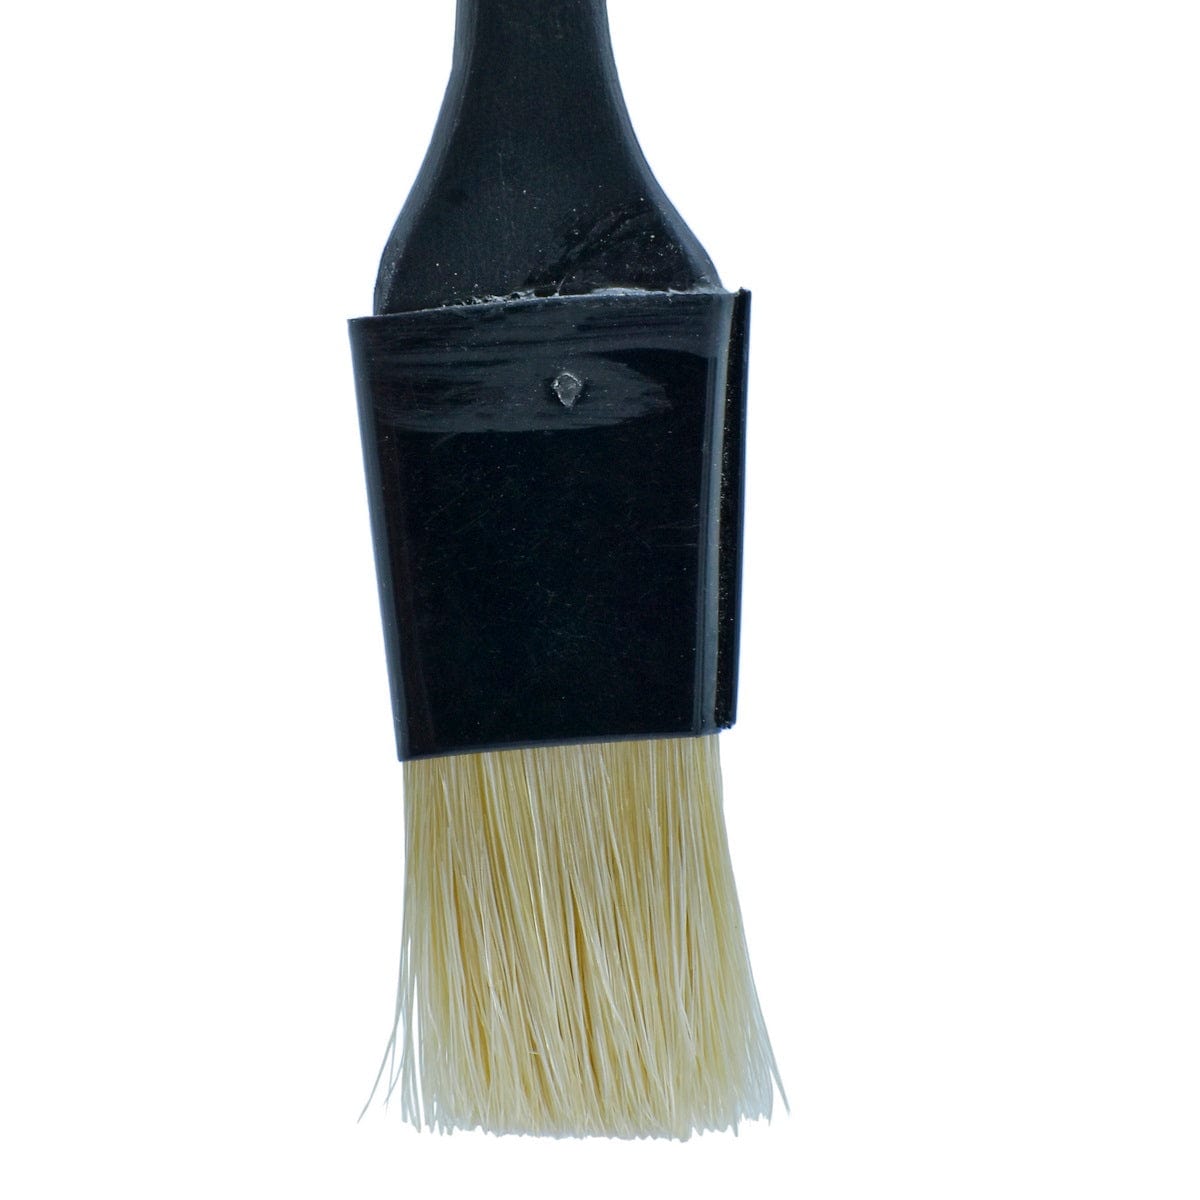 jags-mumbai Tools Jags Wash Brush Hog Bristle Black Handle 18MM - Versatile Cleaning Tool for Effective Results